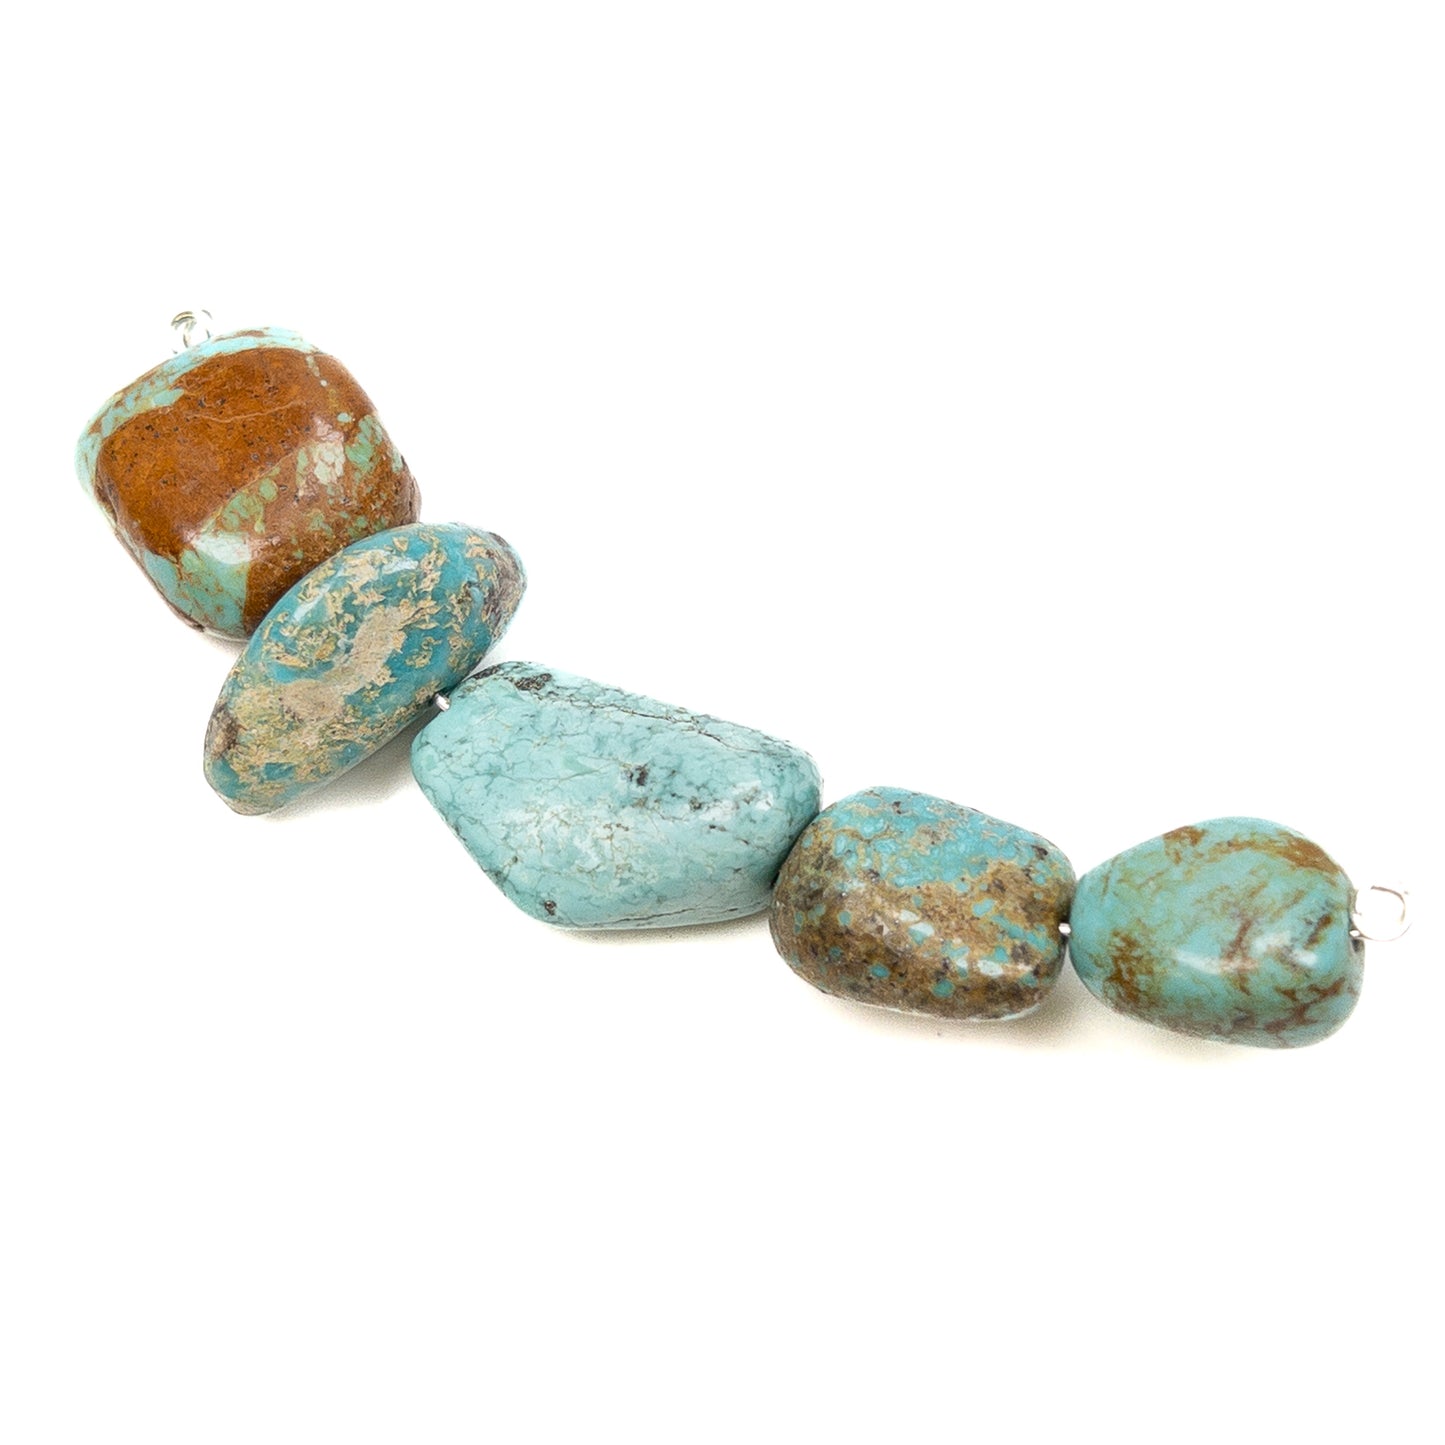 North American Turquoise Medium Tumbled Nugget Bead - 5 pcs.